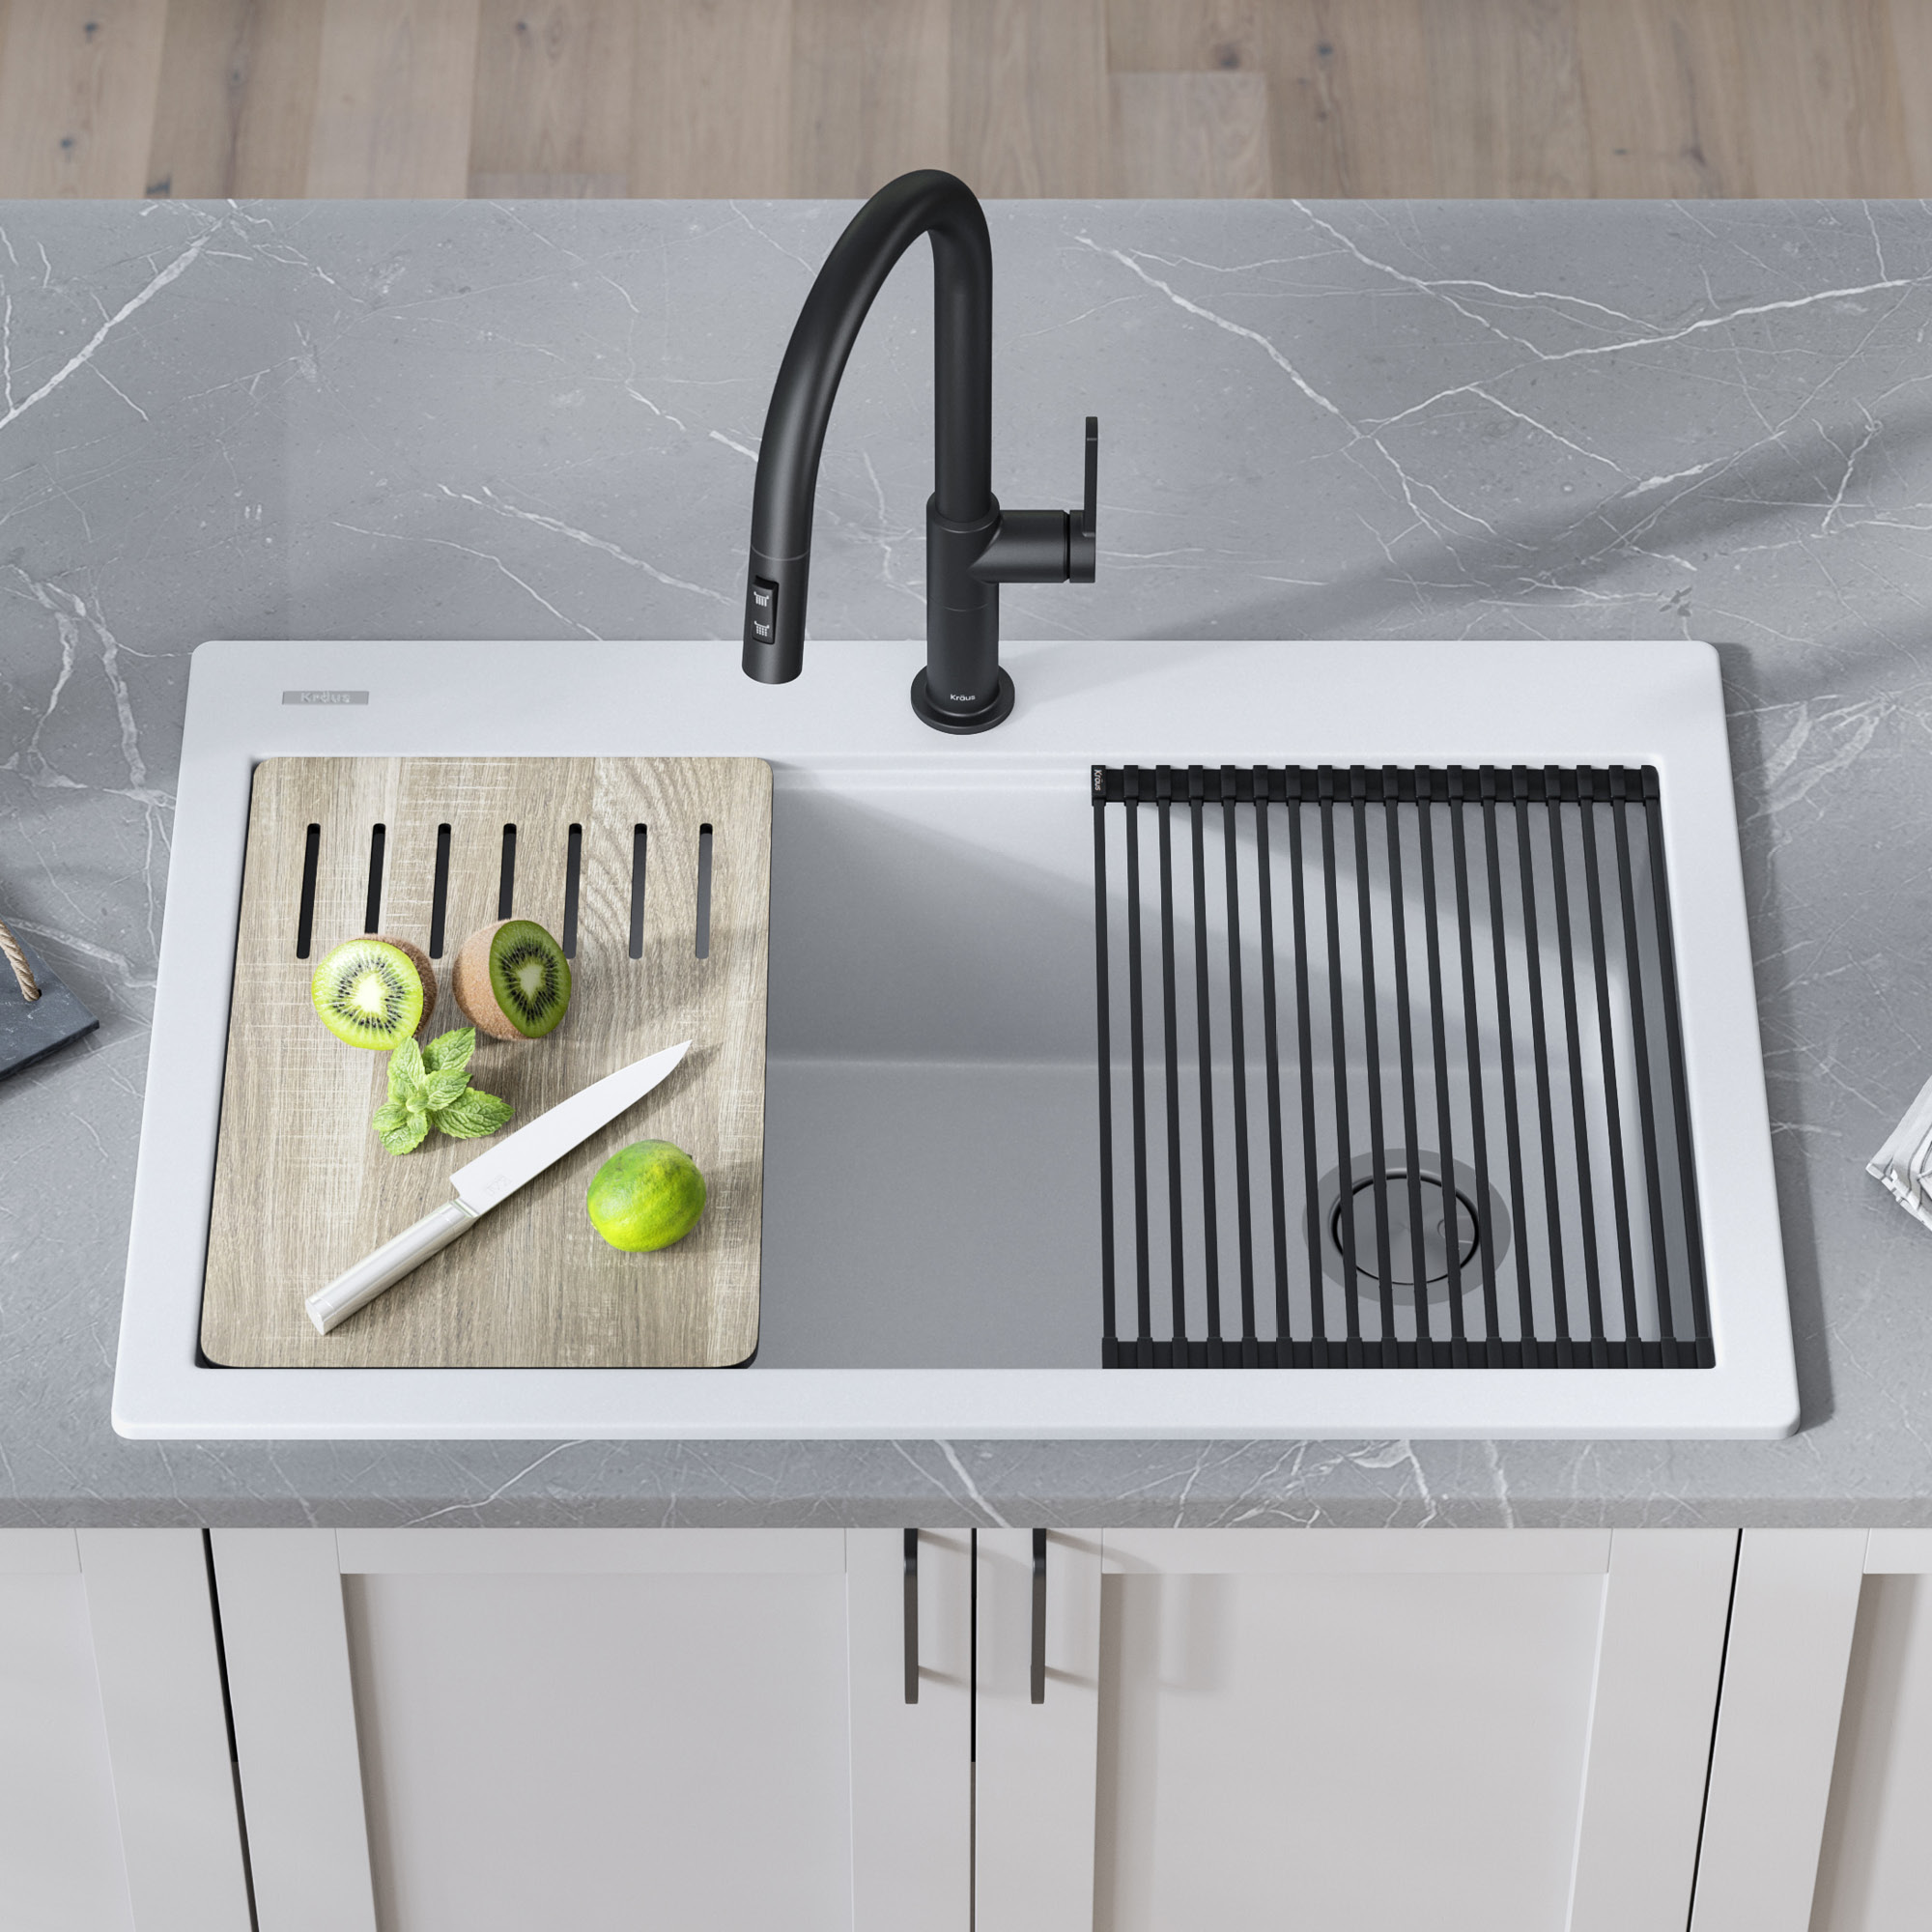 Kraus KGTW1-33WH-100-75MB Workstation Granite Composite Single Bowl Kitchen Sink